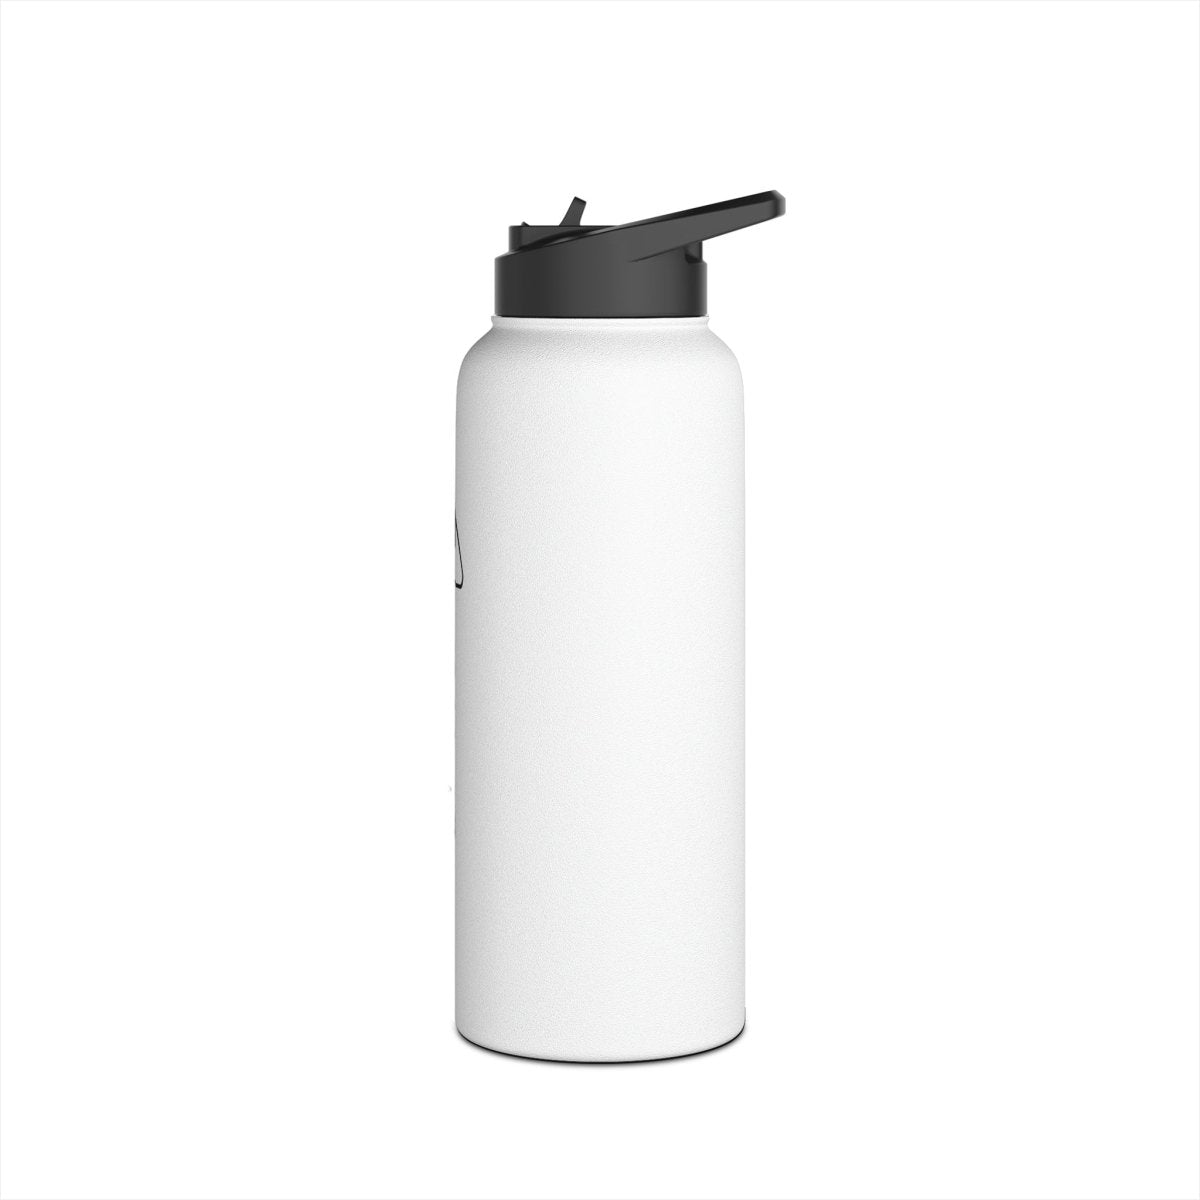 Alfa Romeo Quadrifoglio White Stainless Steel Water Bottle Tumbler - Custom, Personalized - Mug - AI Print Spot